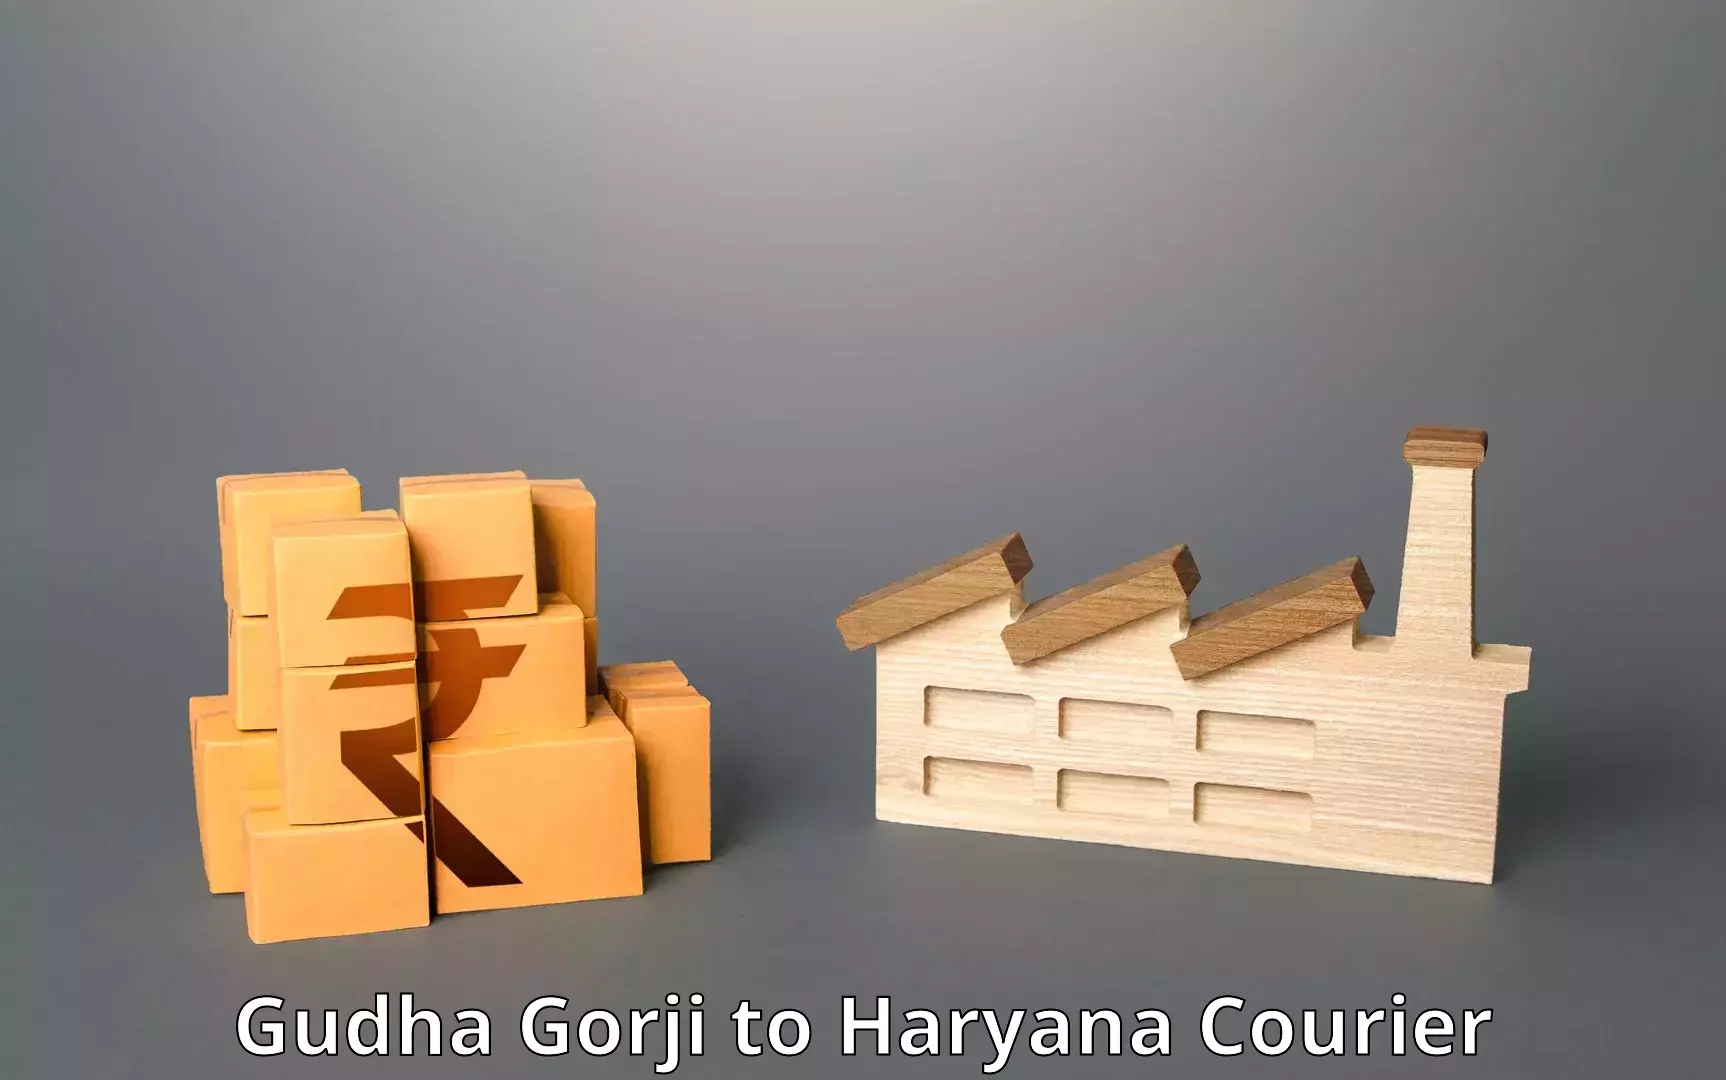 Logistics service provider Gudha Gorji to Haryana